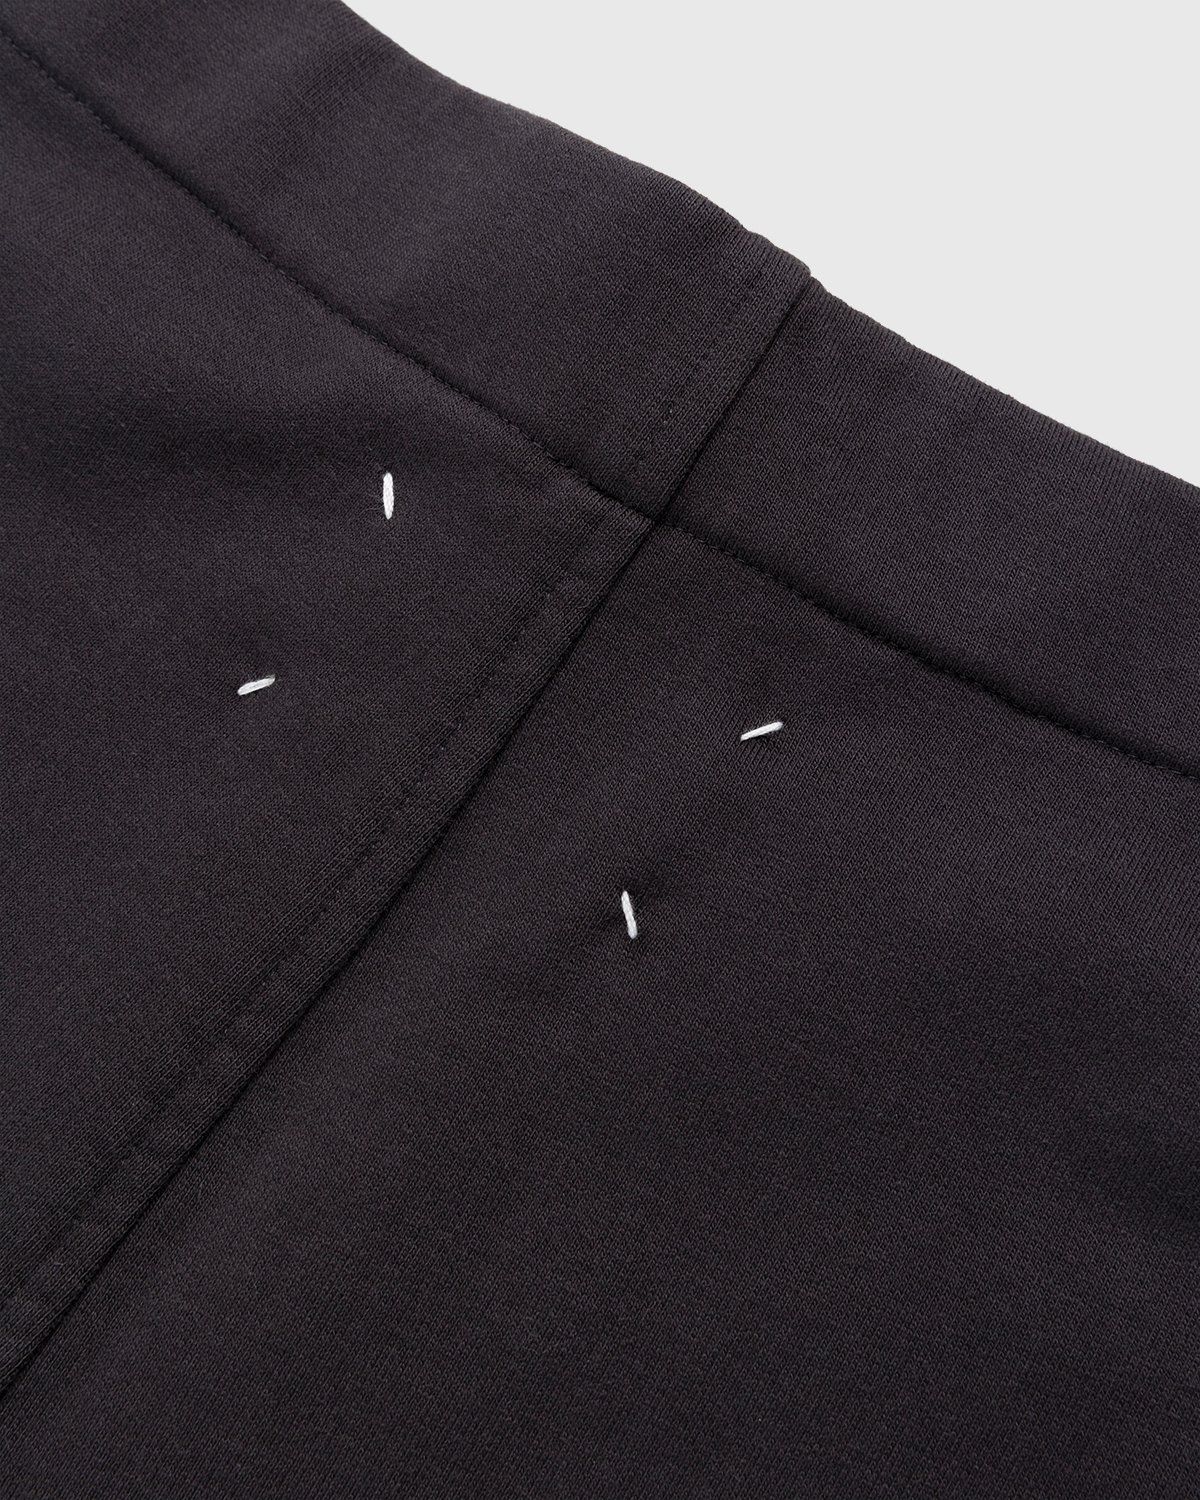 Maison Margiela – Tailored Cotton Trousers Washed Black - Pants - Black - Image 7